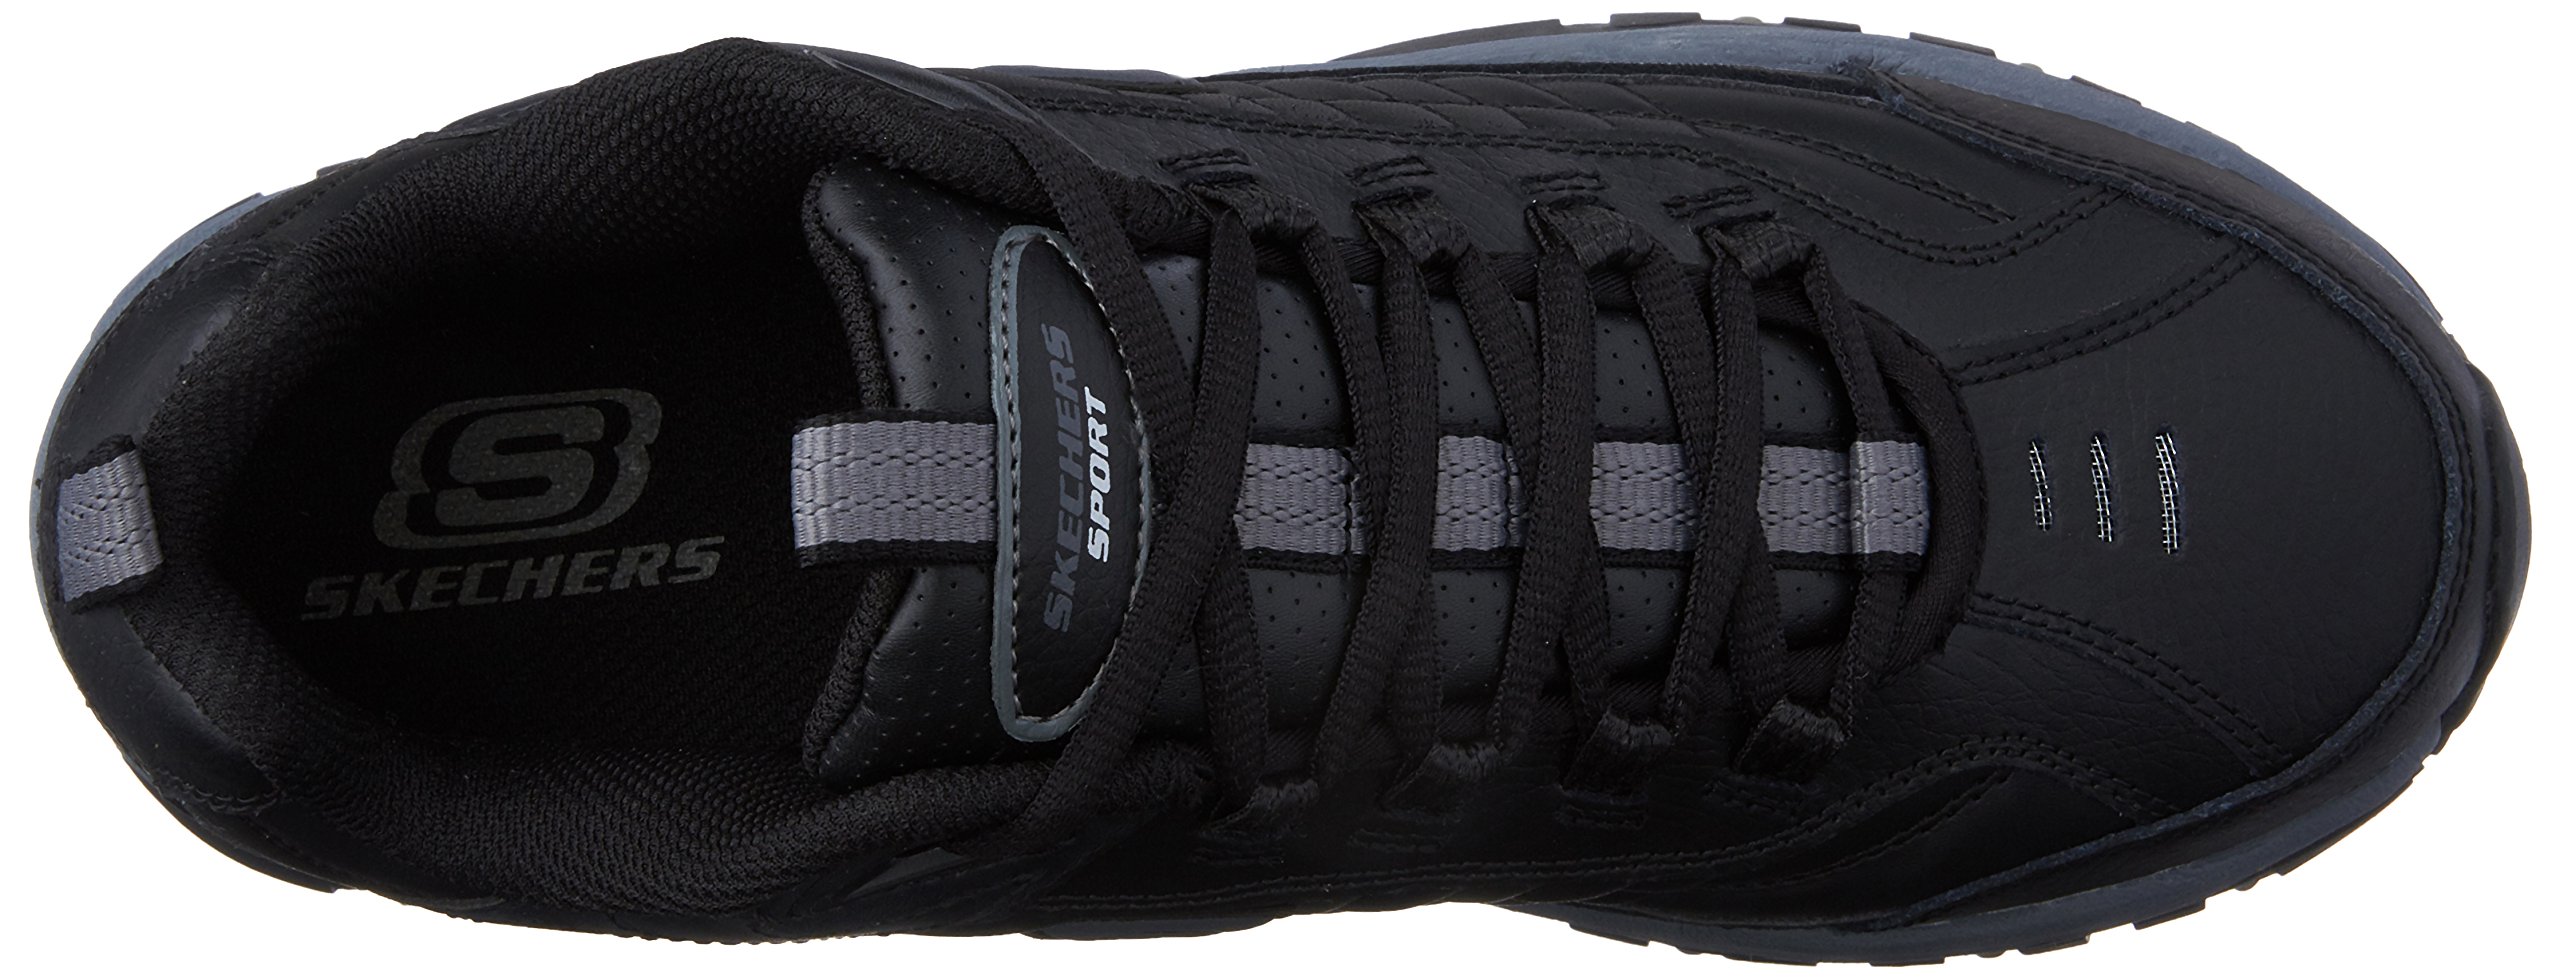 Skechers Men's Energy Afterburn Shoes Lace-Up Sneaker, Black/Black, 10